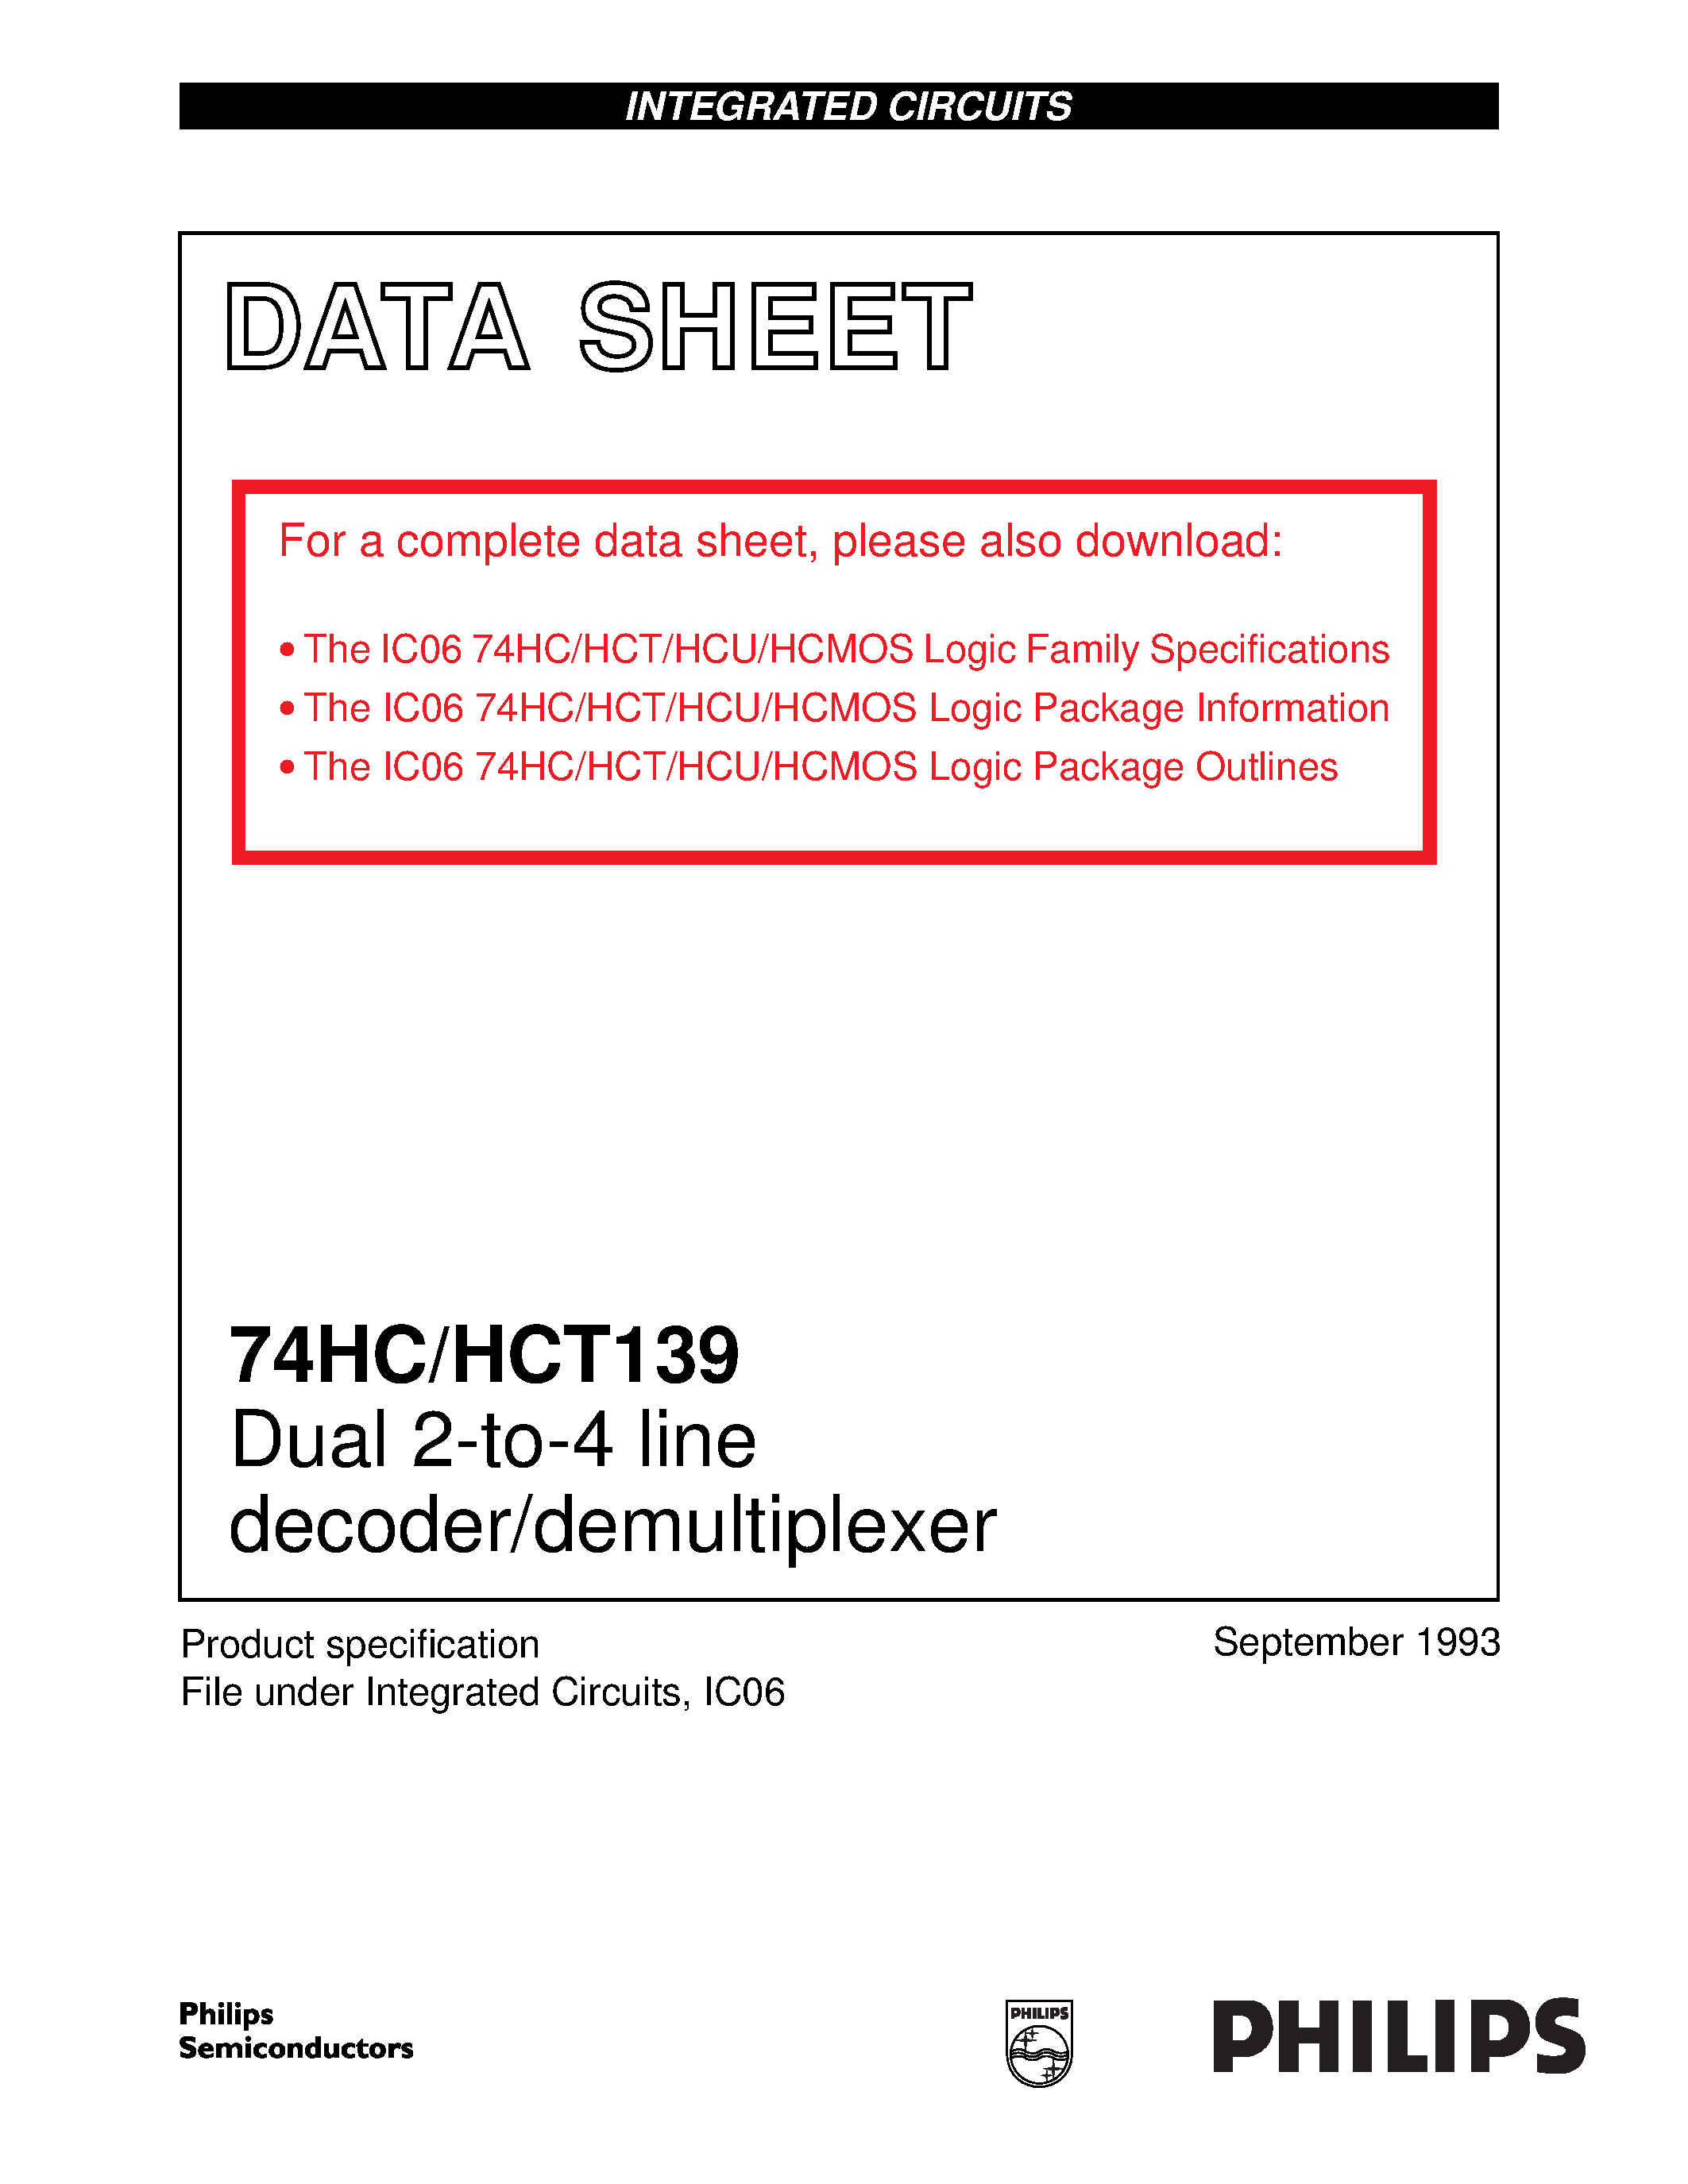 Datasheet 74HCT139 - Dual 2-to-4 line decoder/demultiplexer page 1